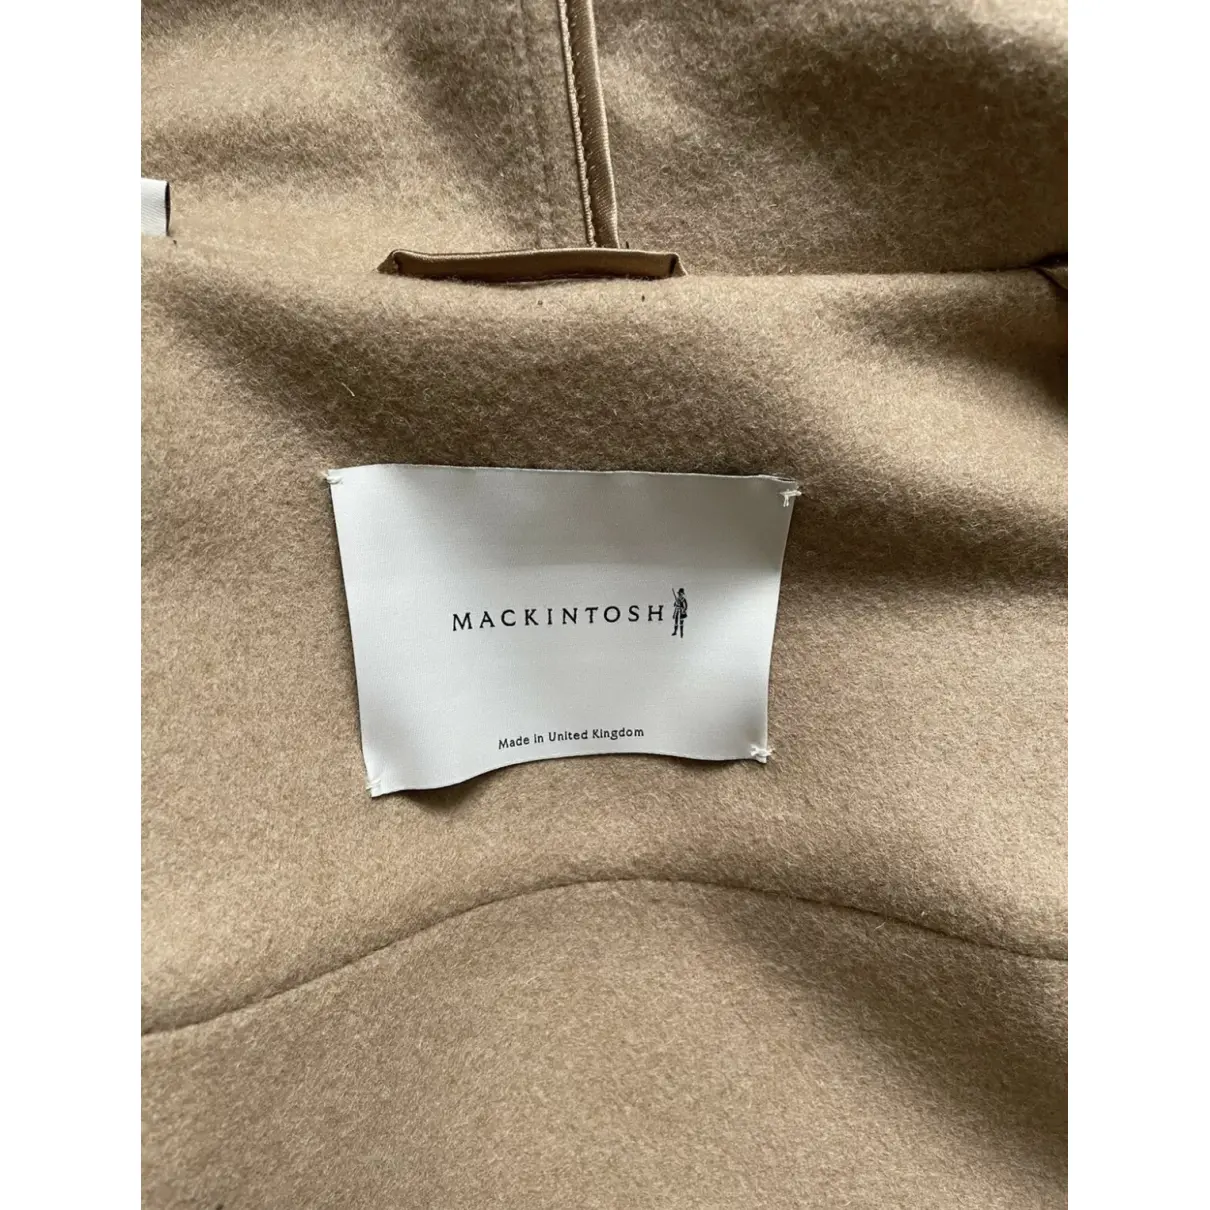 Buy Mackintosh Wool dufflecoat online